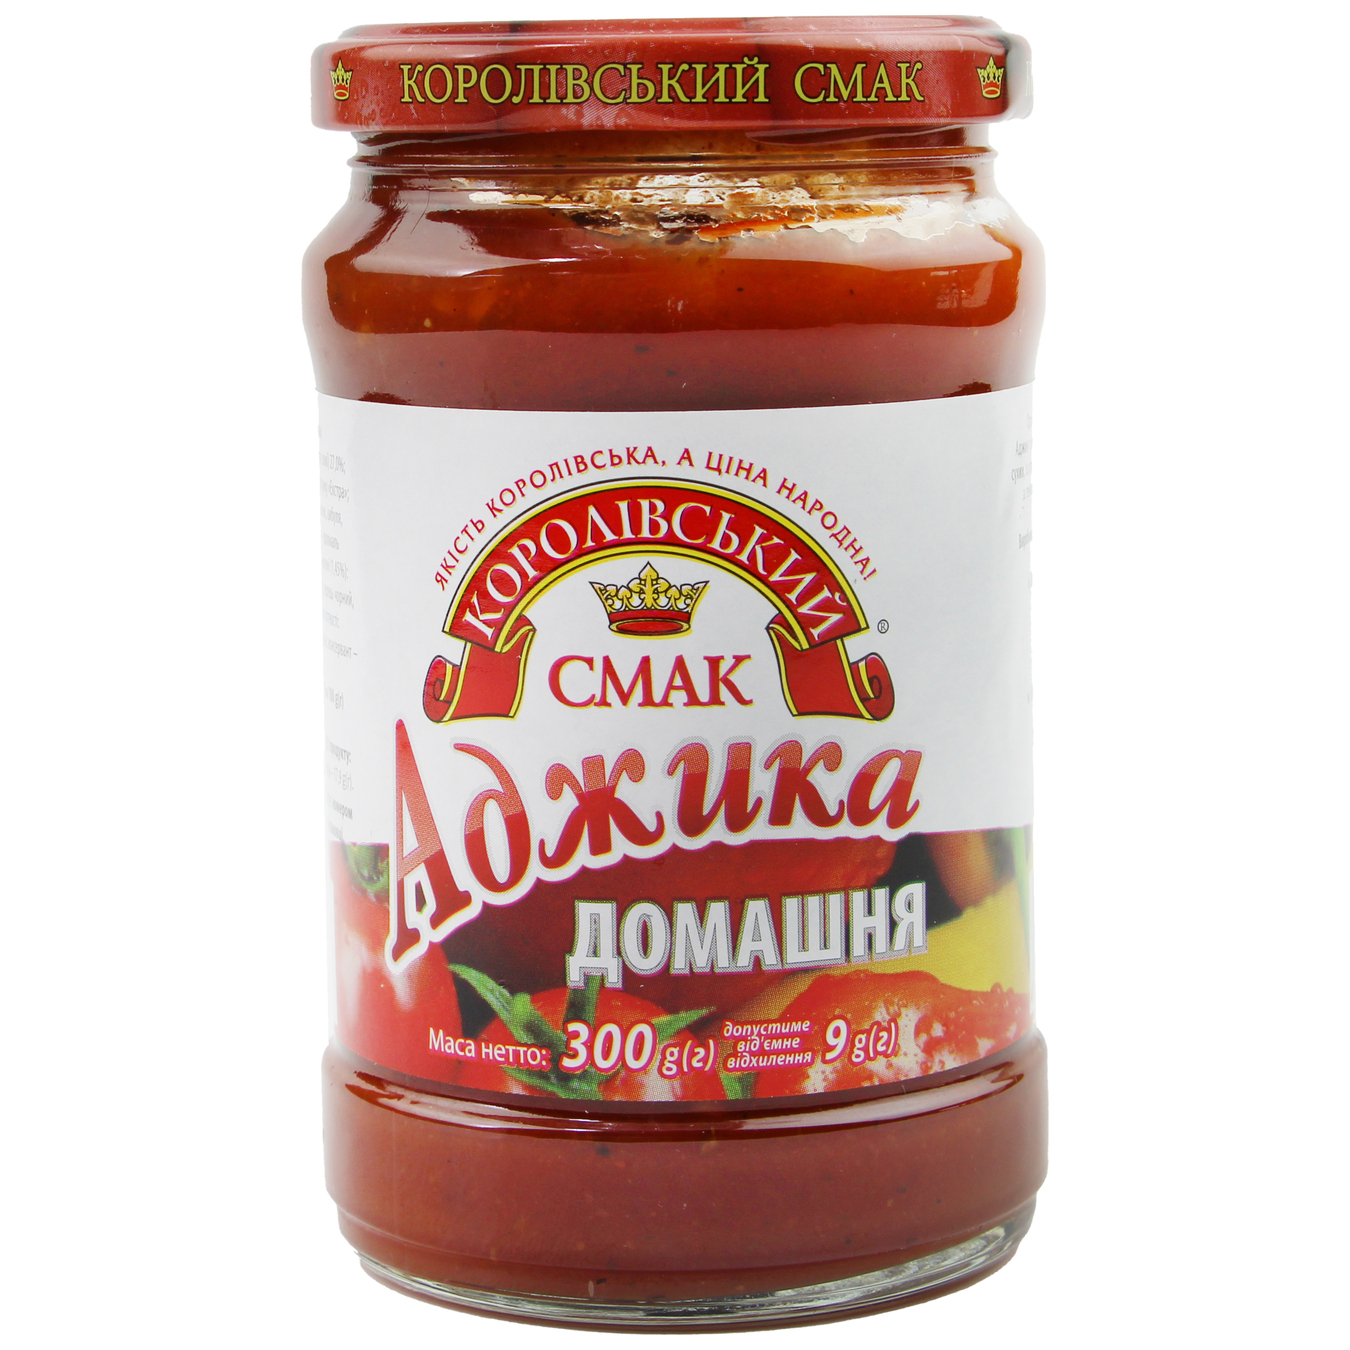 Korolivskiy Smak Homemade Adjika 300g